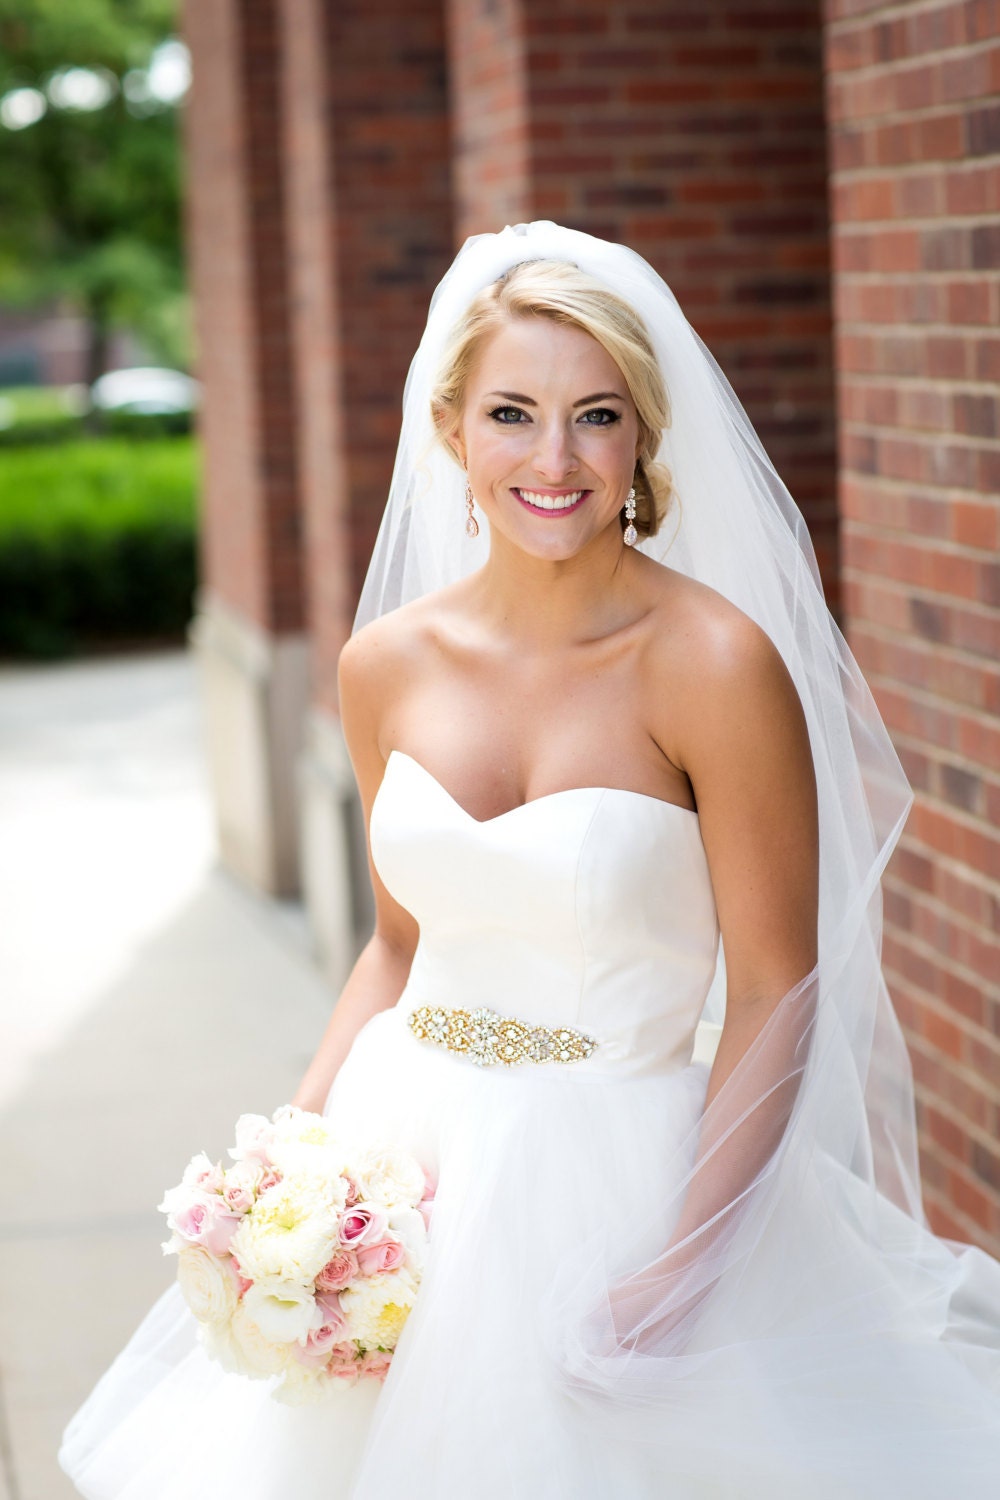 Silver Leaf Bridal Sash | Rhinestone Wedding Belt | Crystal Sash Belt | Leaf Bridal Belt | Pearl Bridal Belt Sash | Ariana Sash